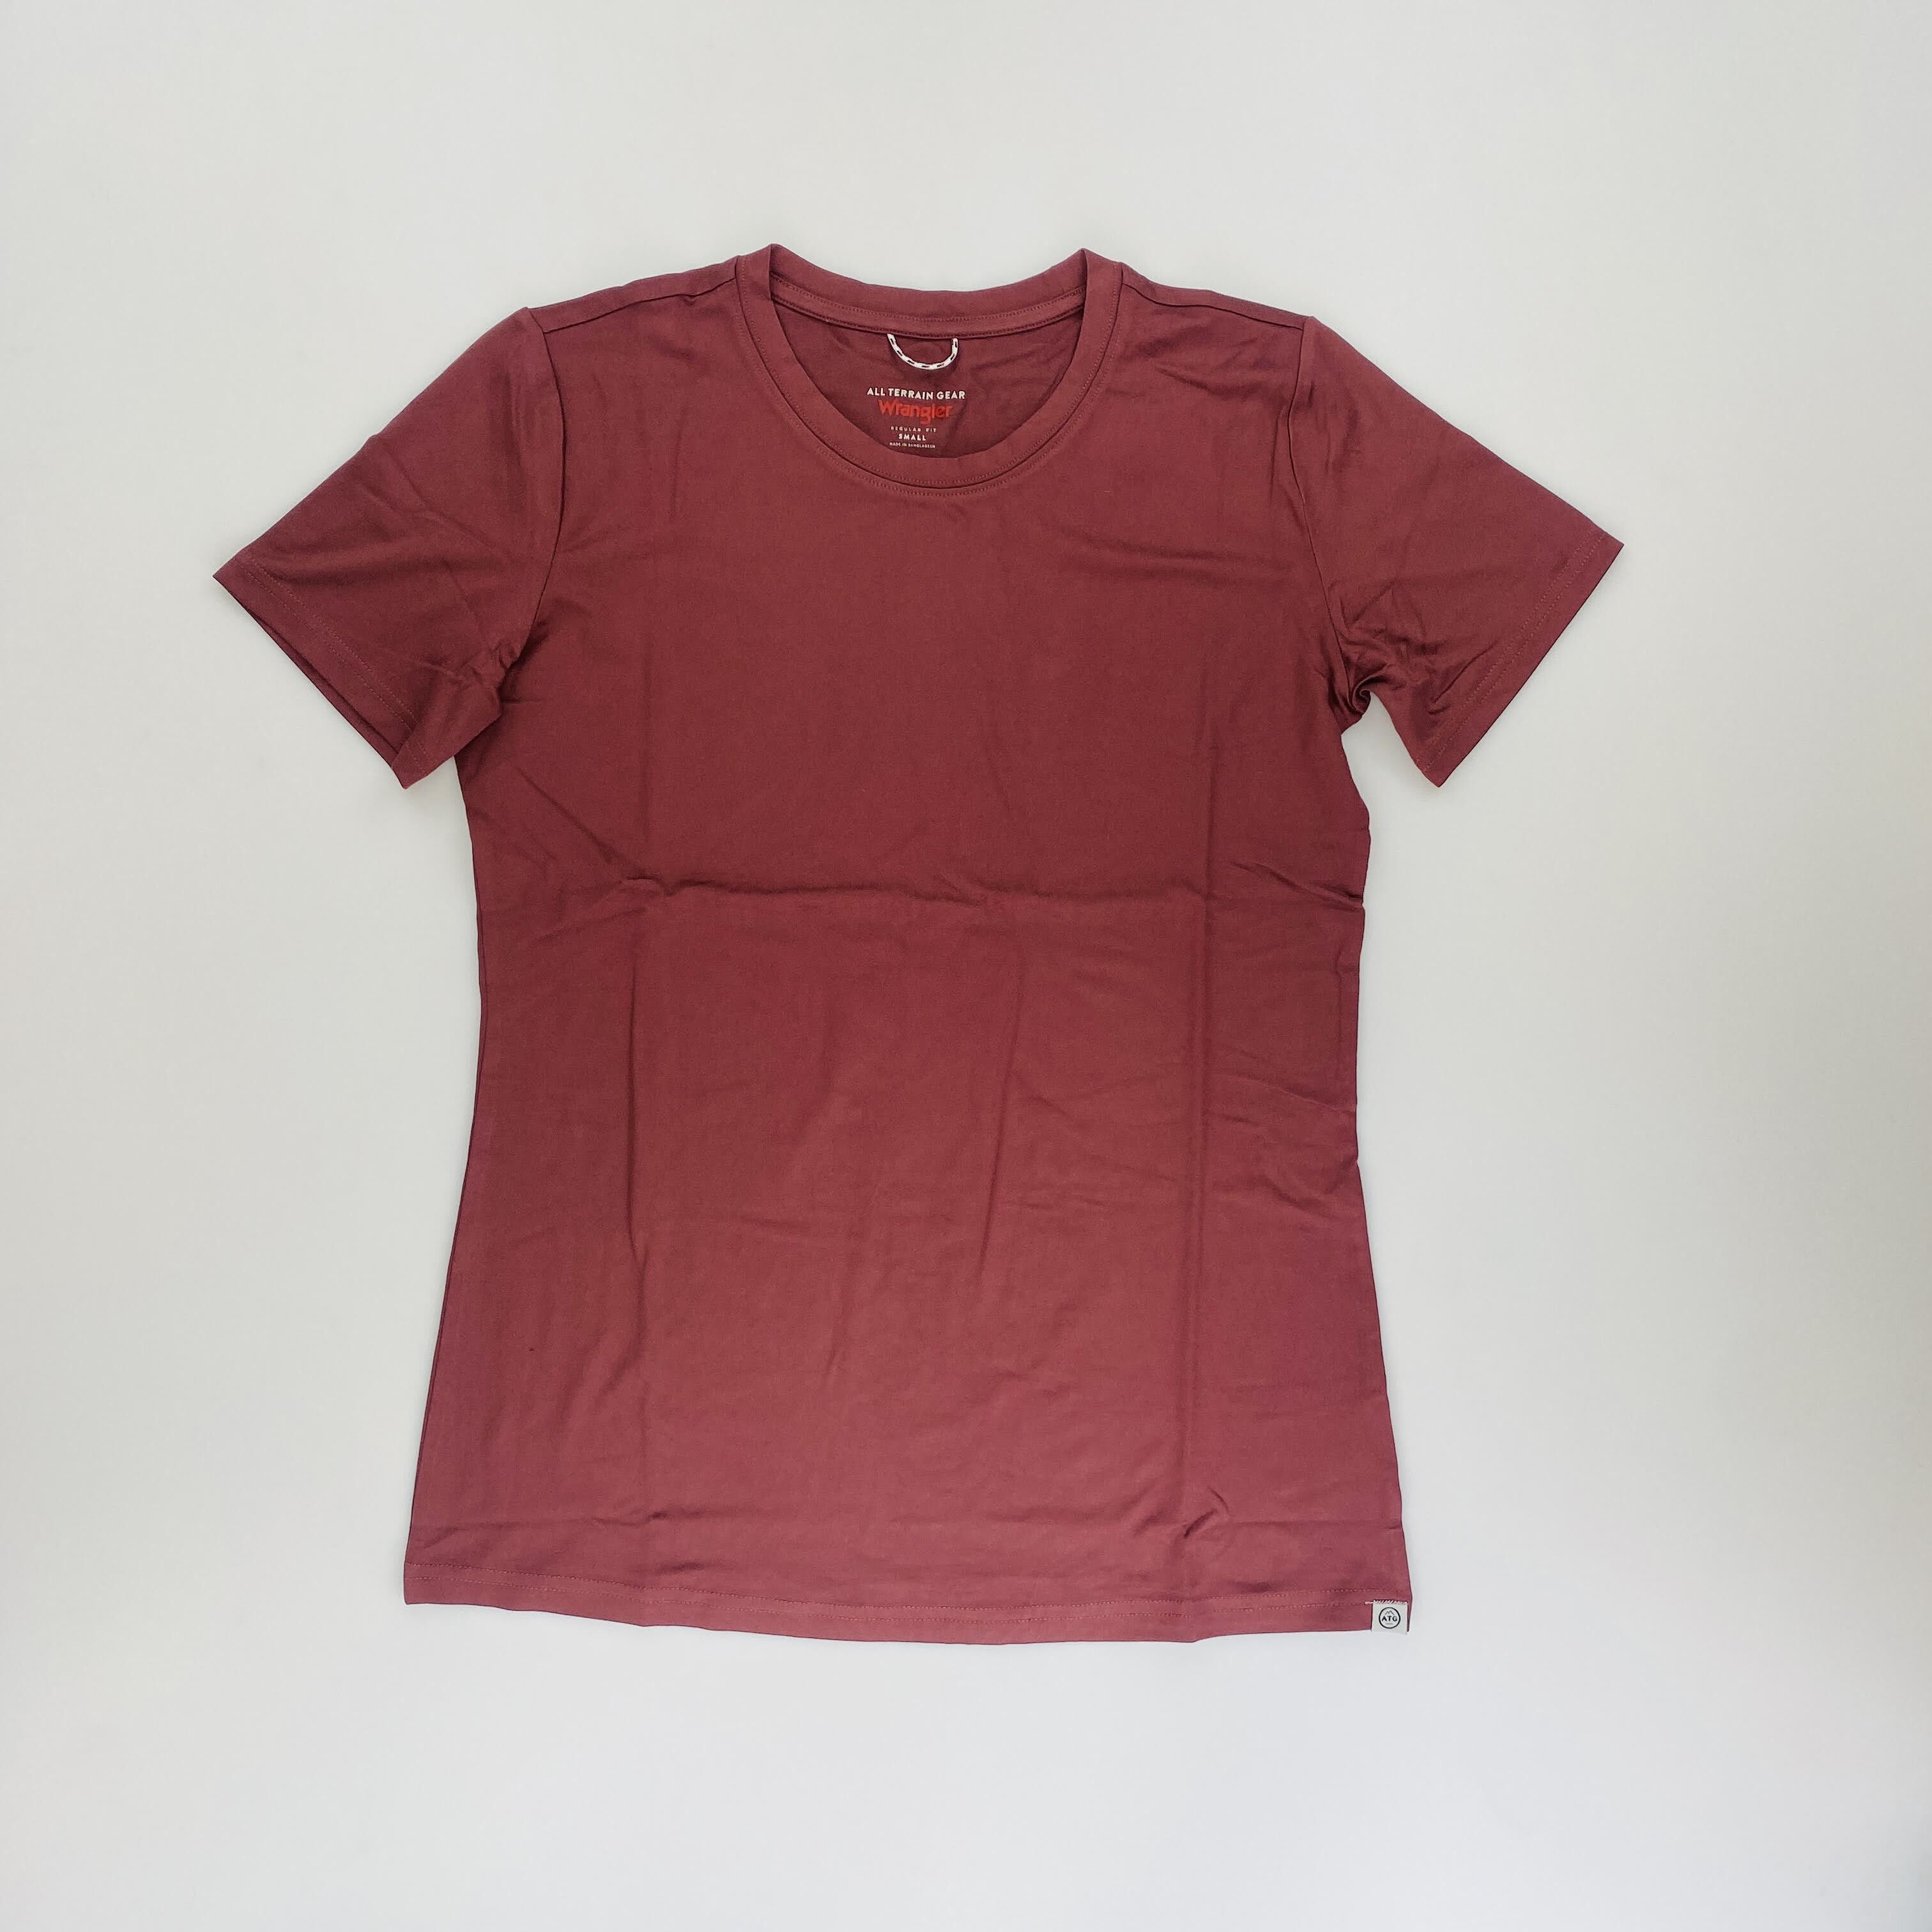 Wrangler Performance T Shirt - T-shirt di seconda mano - Donna - Rosso - S | Hardloop